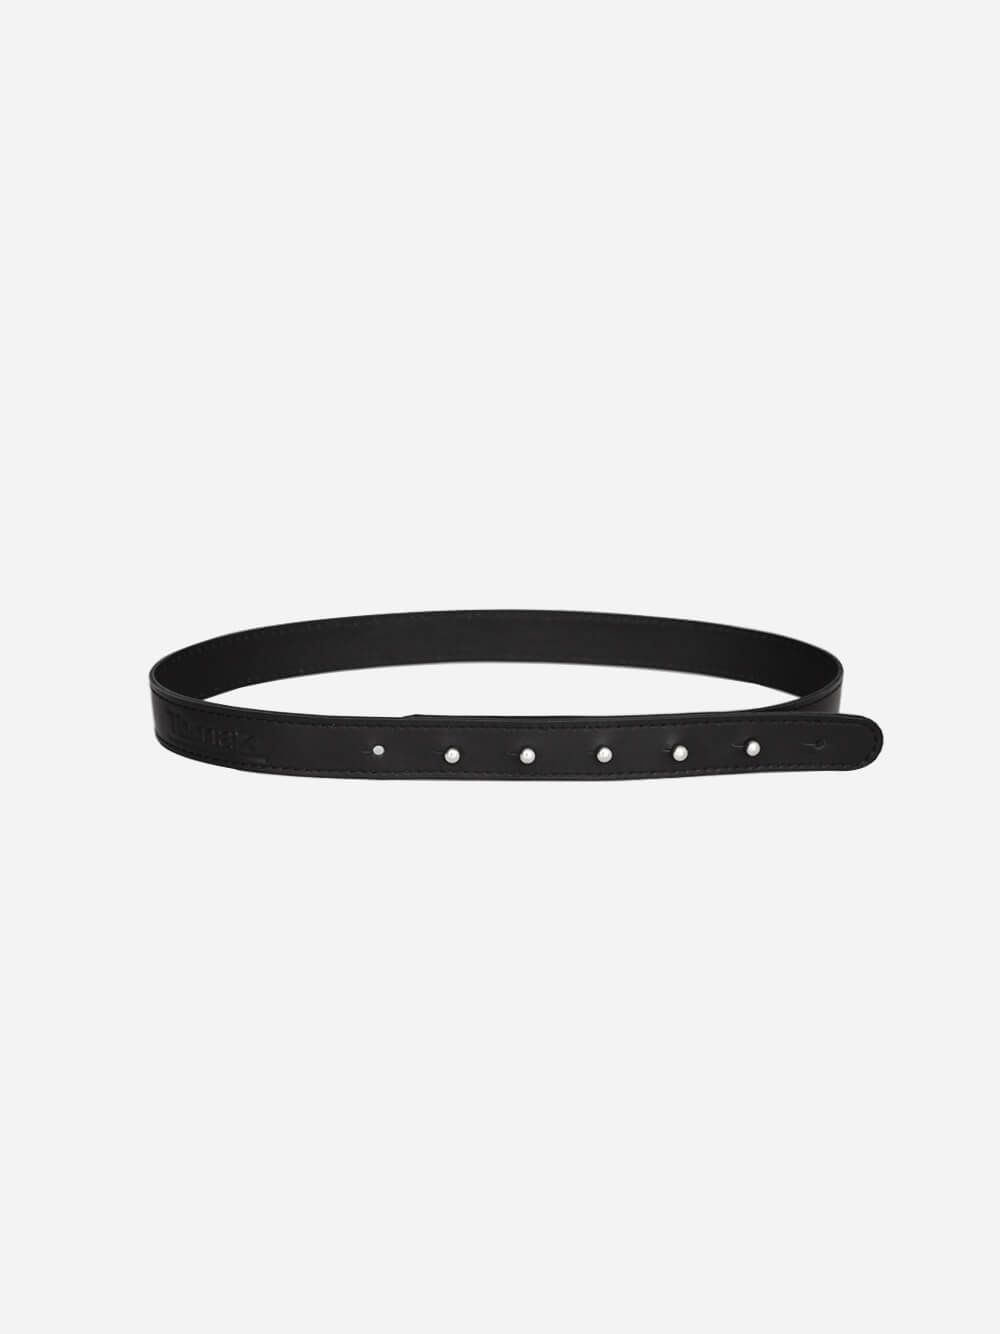 Francis Leather Black Belt | Tomaz